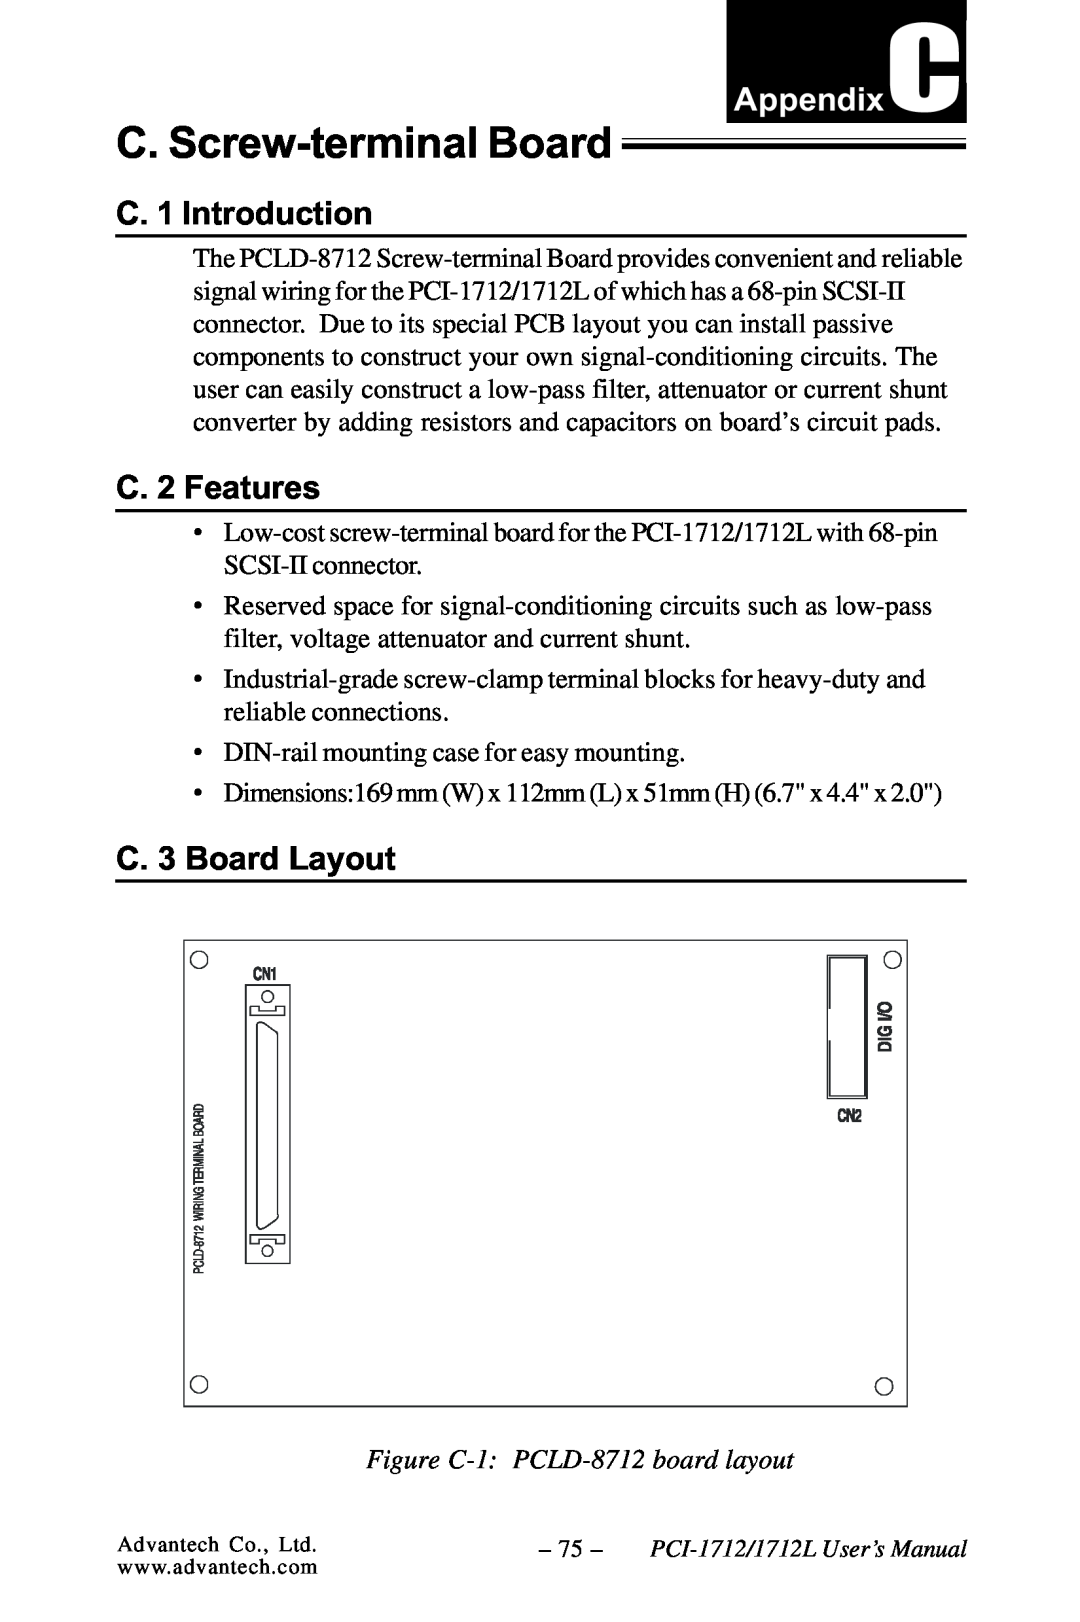 Konica Minolta PCI-1712L C. Screw-terminal Board, C. 1 Introduction, AppendixC, C. 2 Features, C. 3 Board Layout 